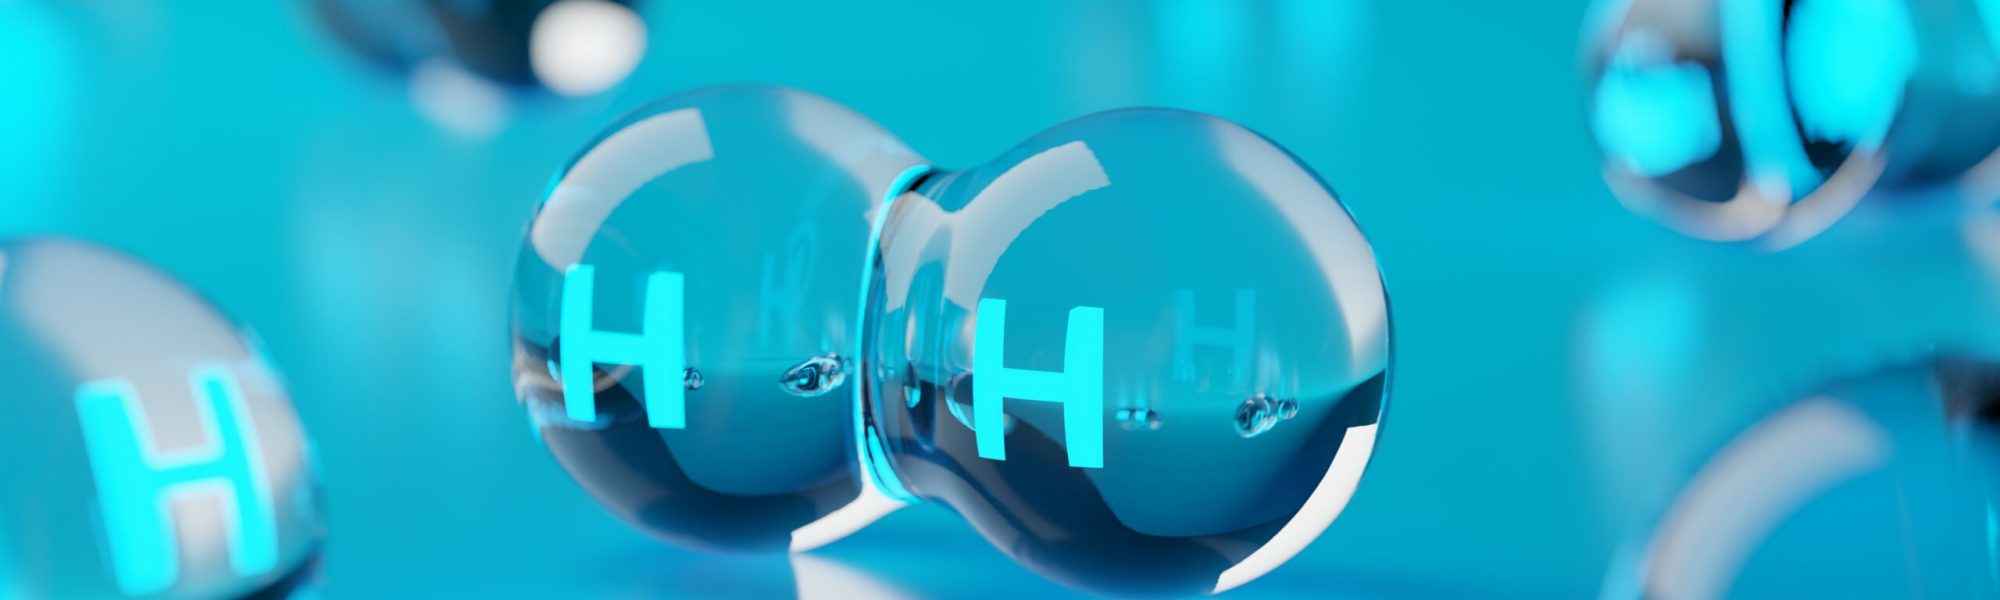 H2 Molekülverbindung